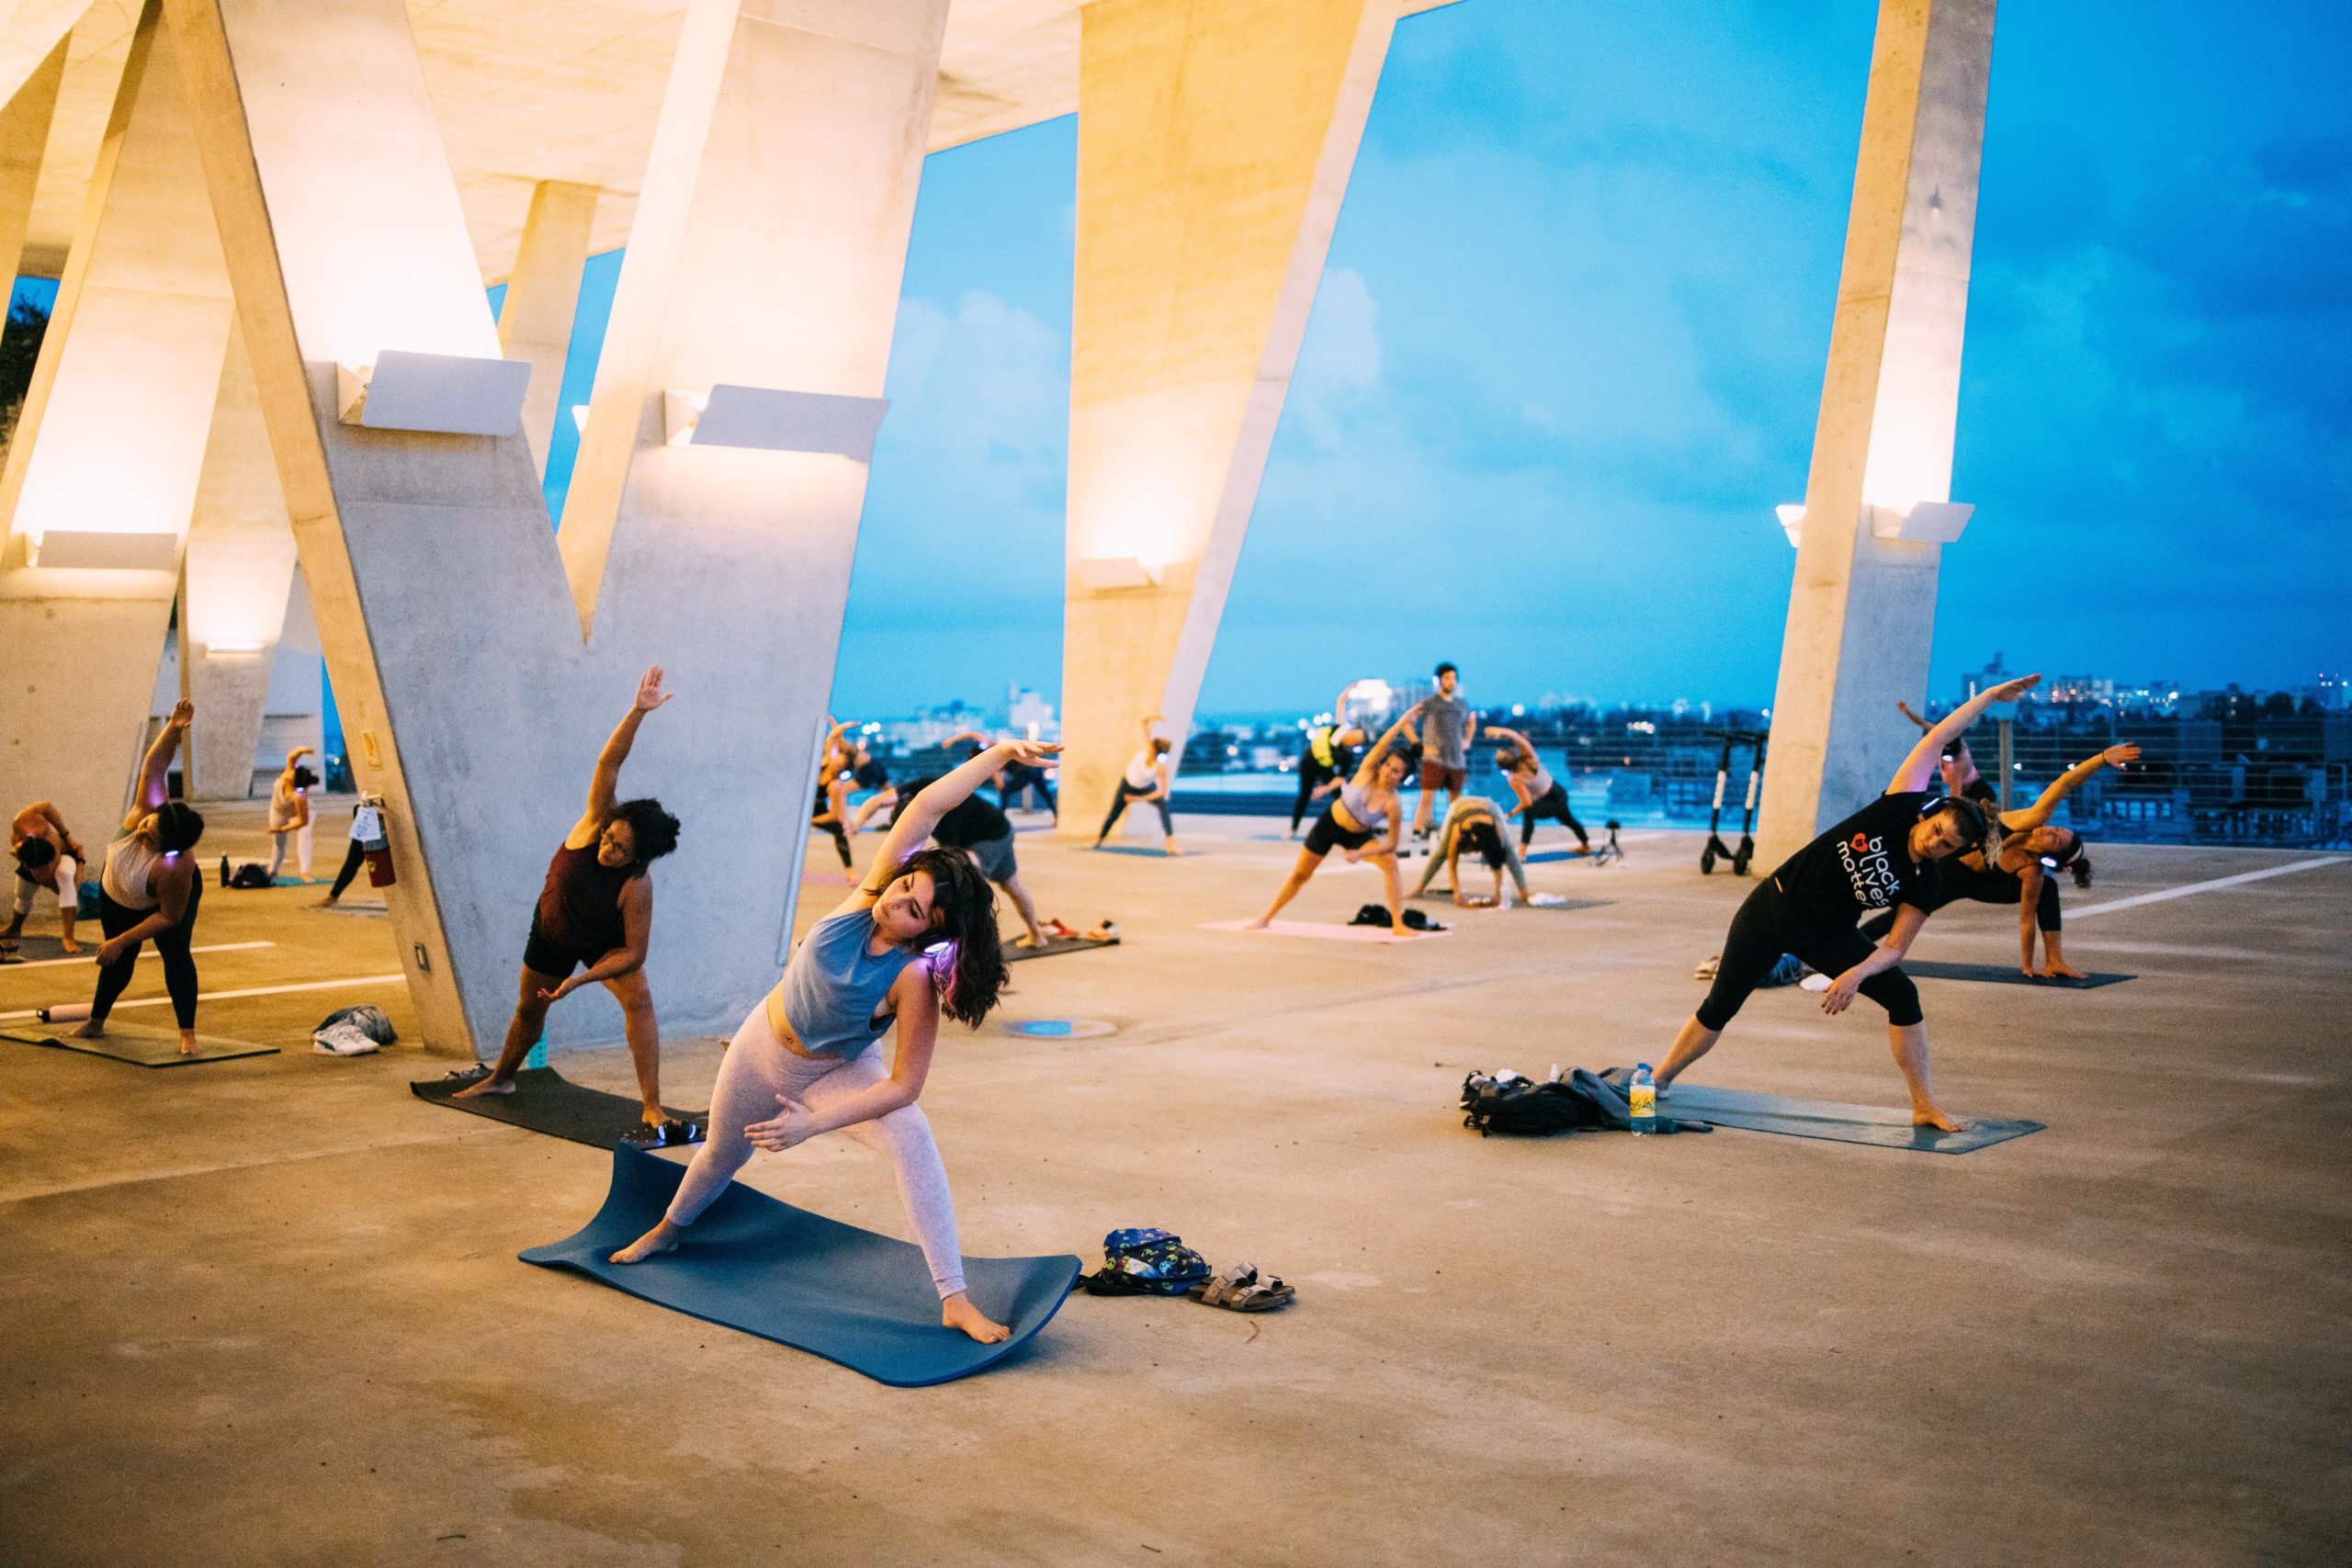 Socially distanced yogis practice outdoors